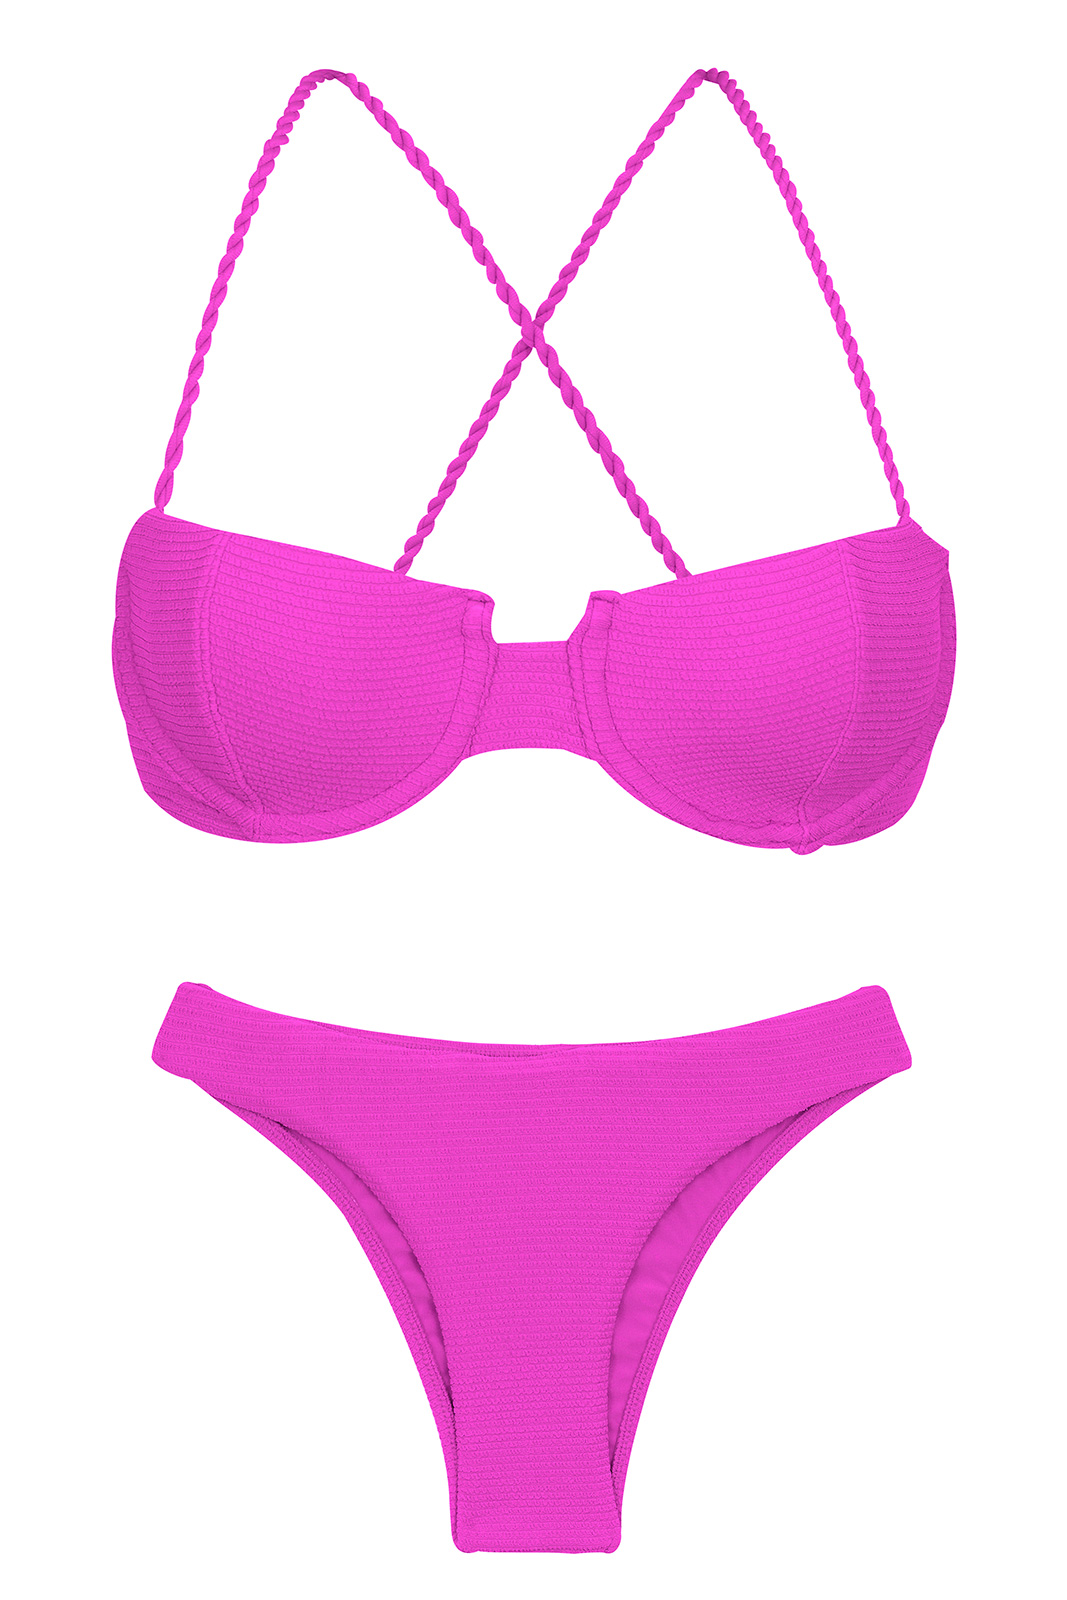 Textured Magenta Pink Balconette Bikini With Crossed Straps Set St Tropez Pink Balconet